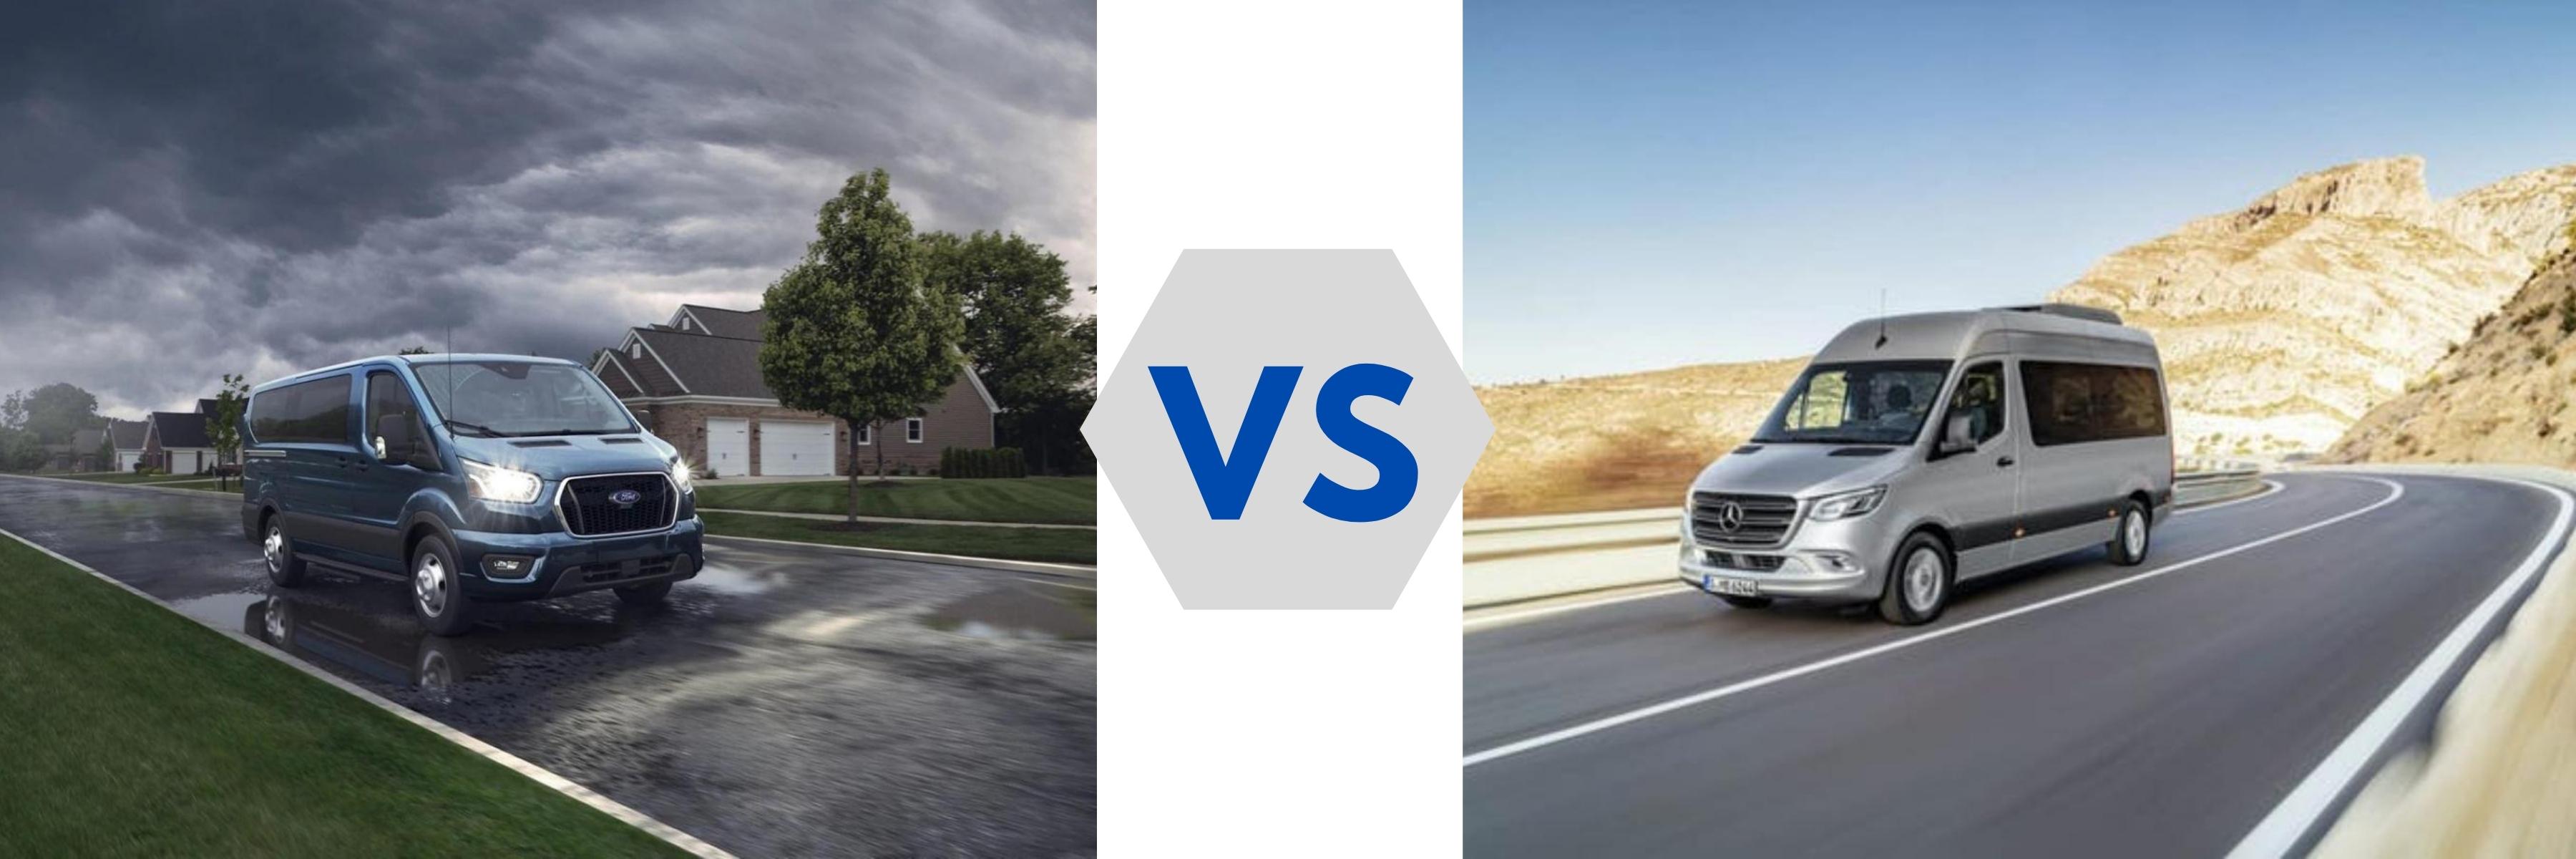 2021 Ford Transit vs Mercedes Benz Sprinter